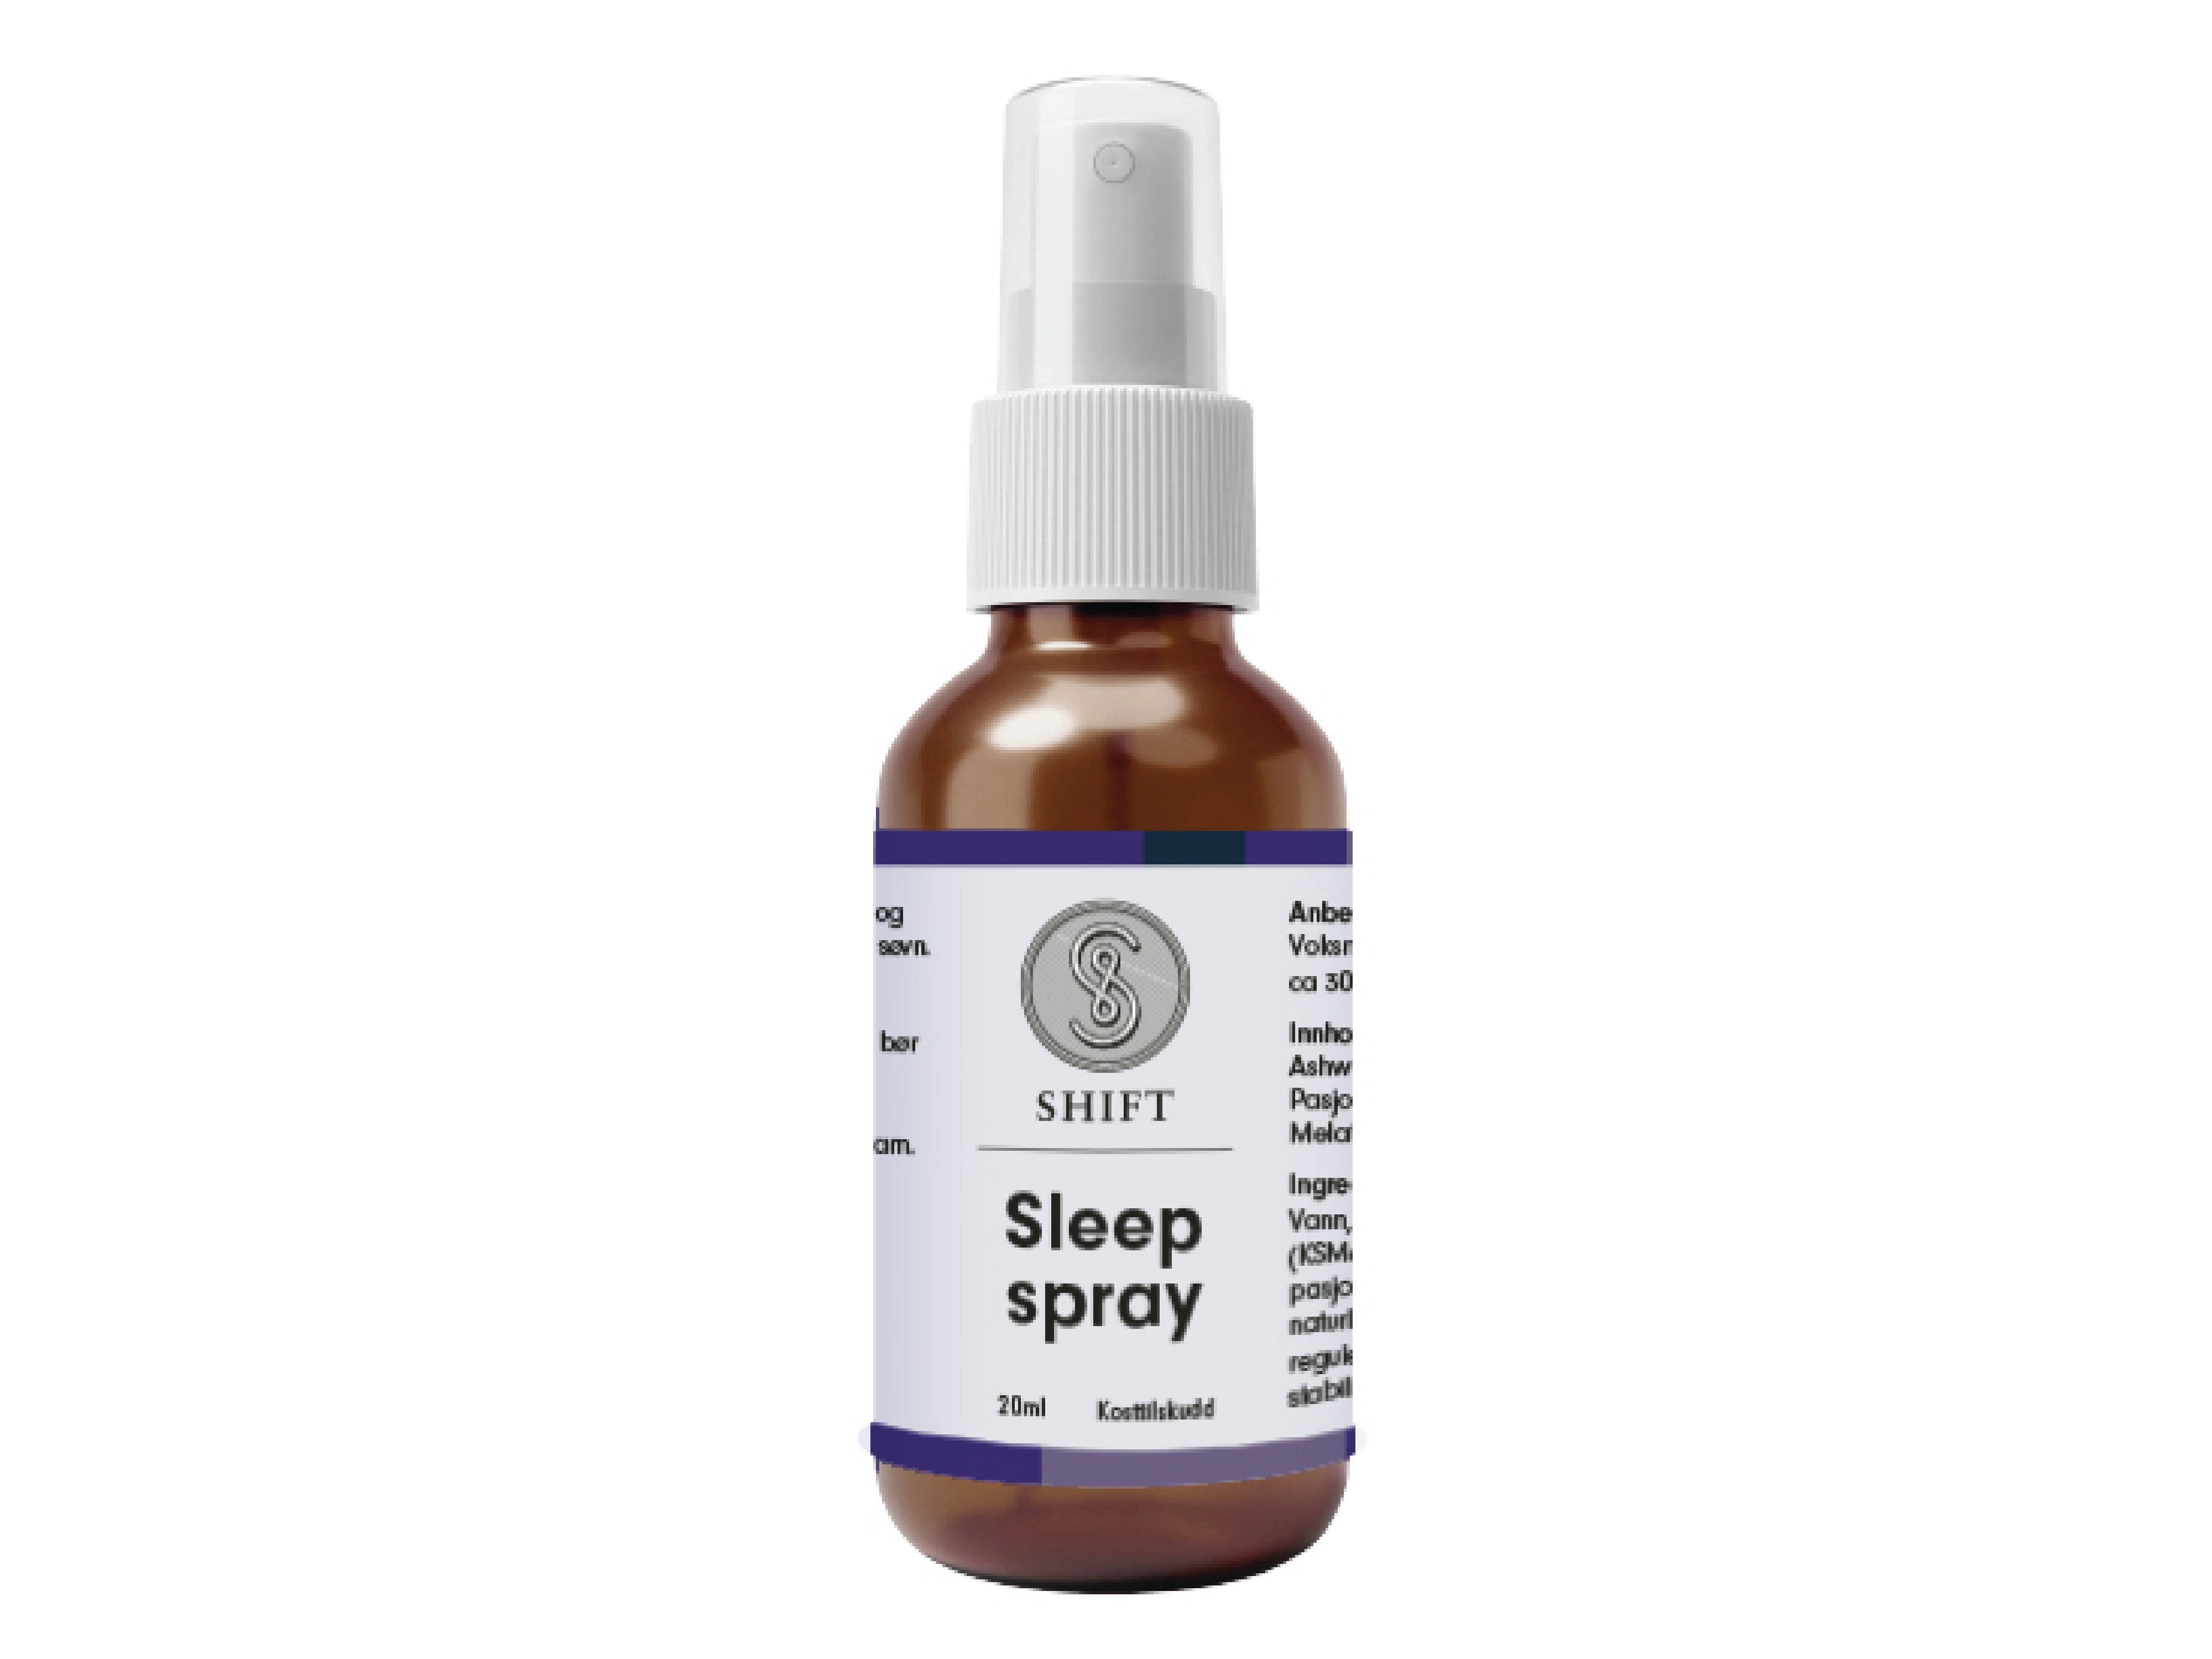 Shift Sleep spray, 20 ml